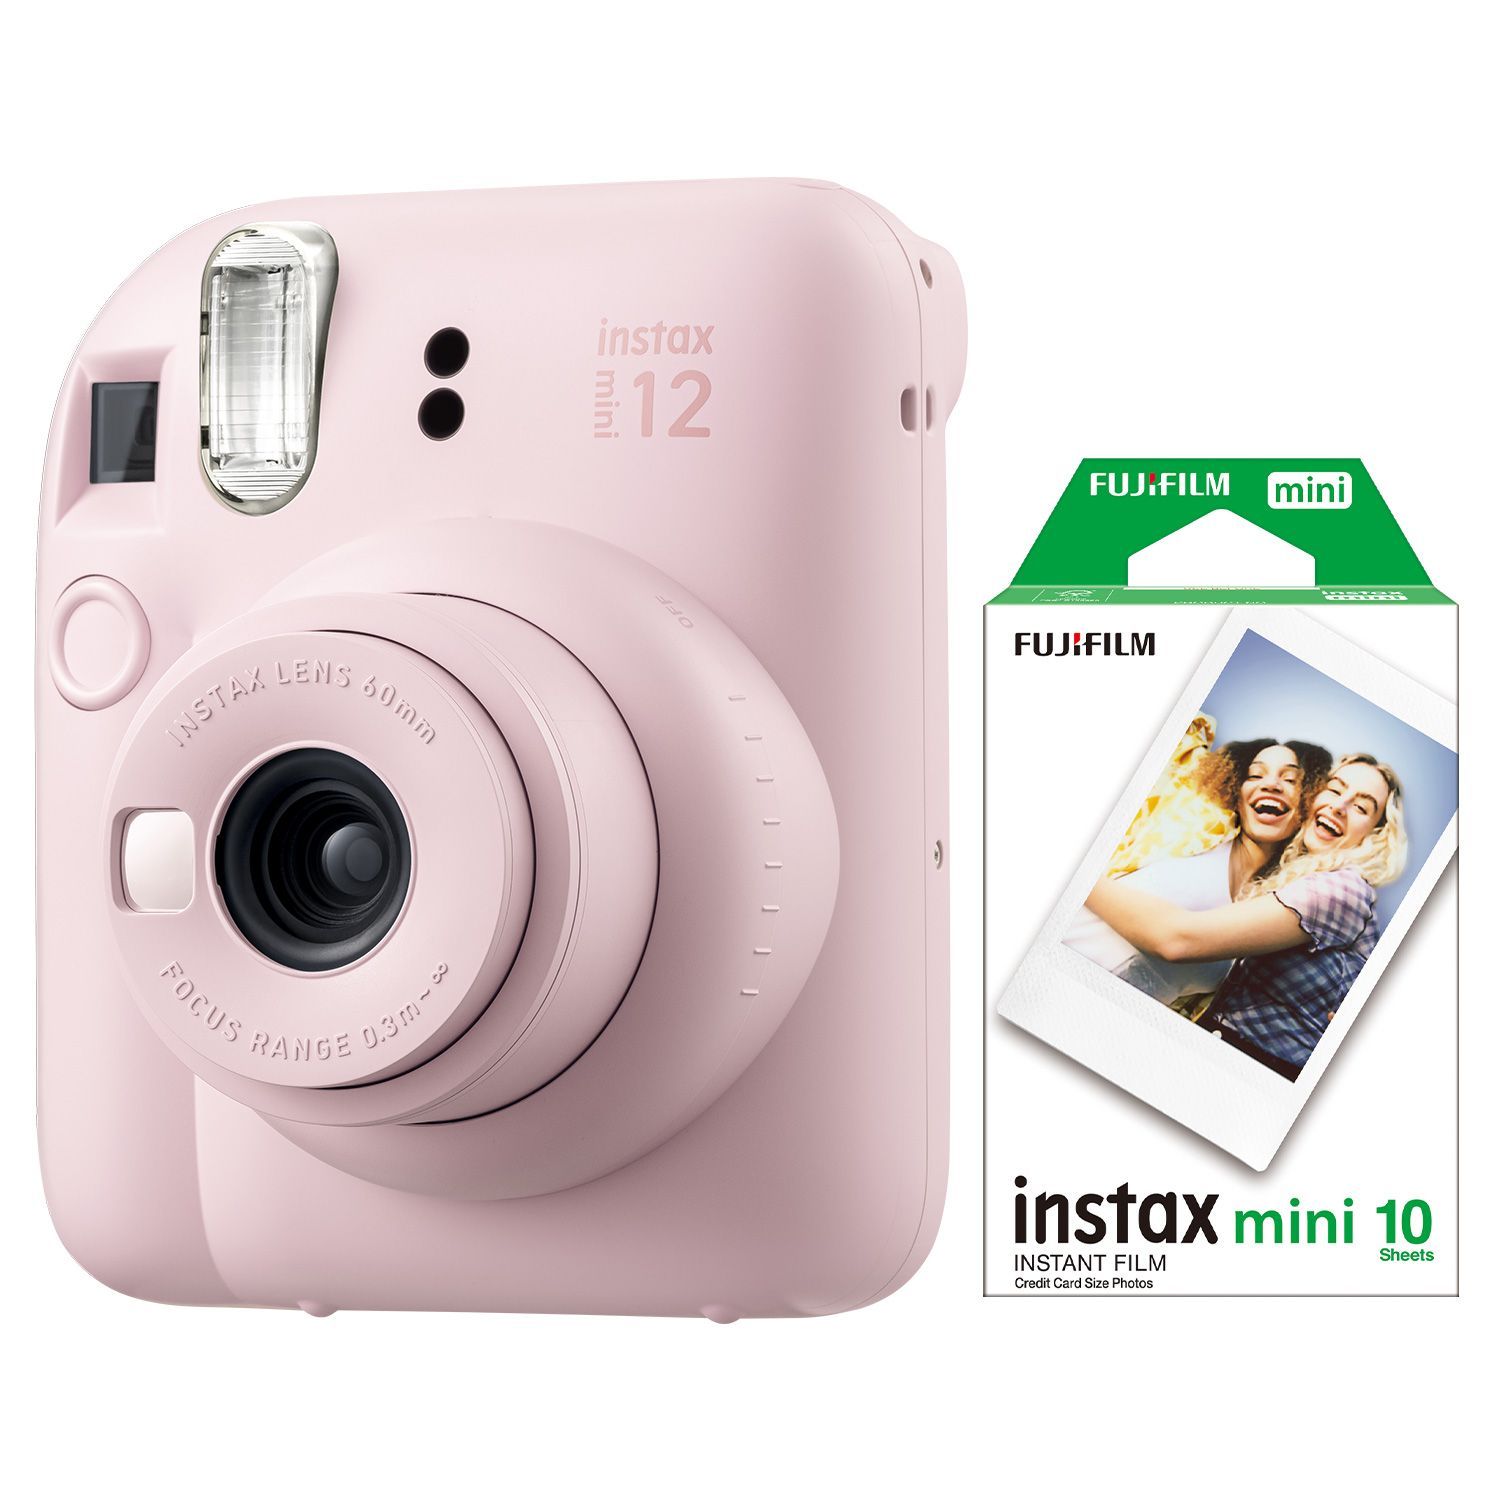 FujifilmКомпактныйфотоаппаратInstaxMini12сиреневый+КартриджидляInstaxMini,10фото,светло-розовый